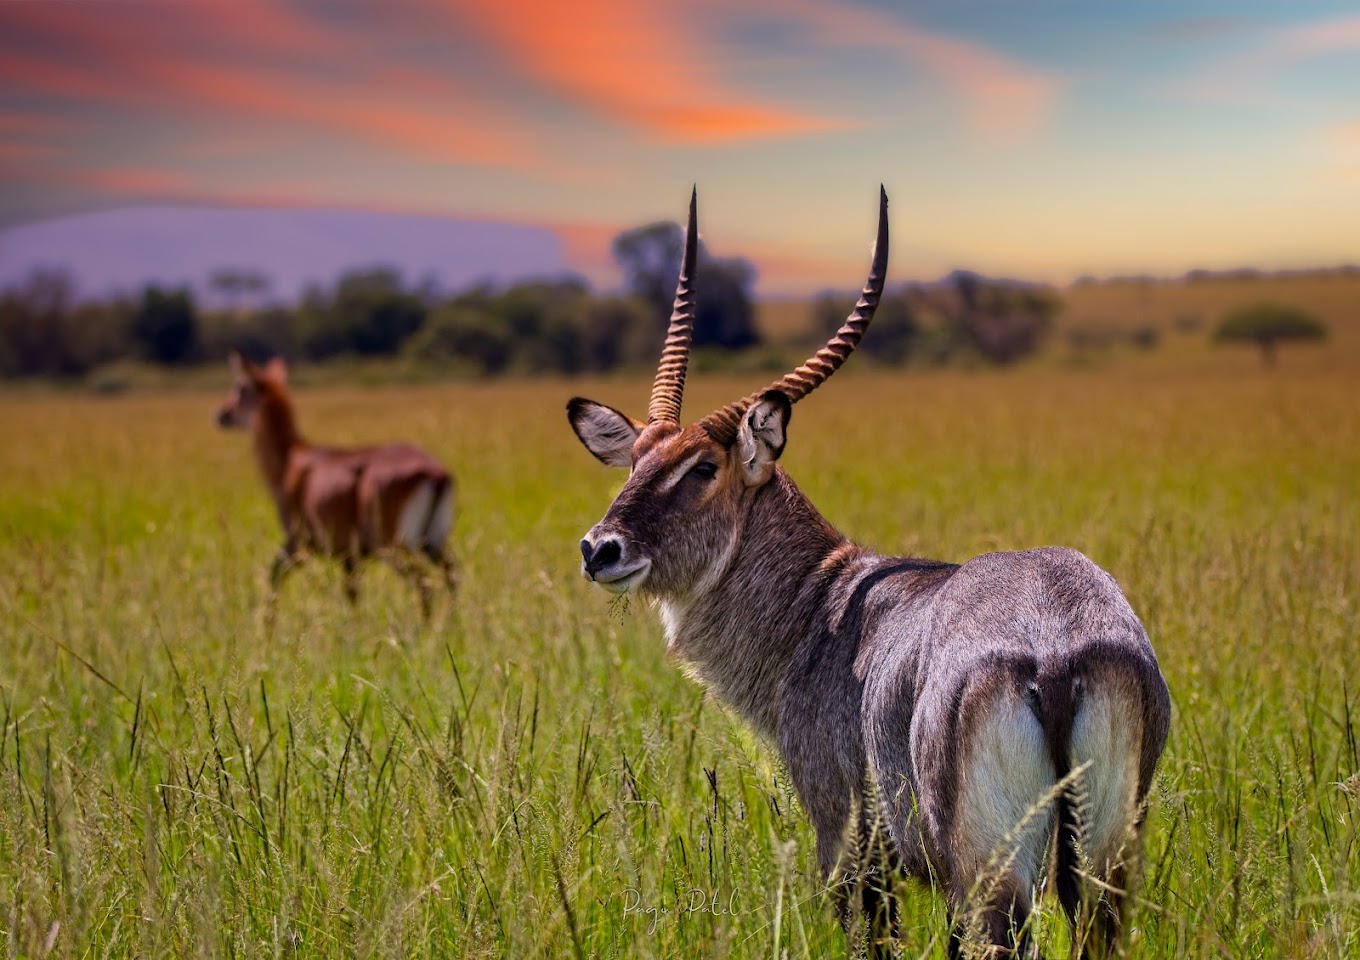 Masaai Mara National Reserve